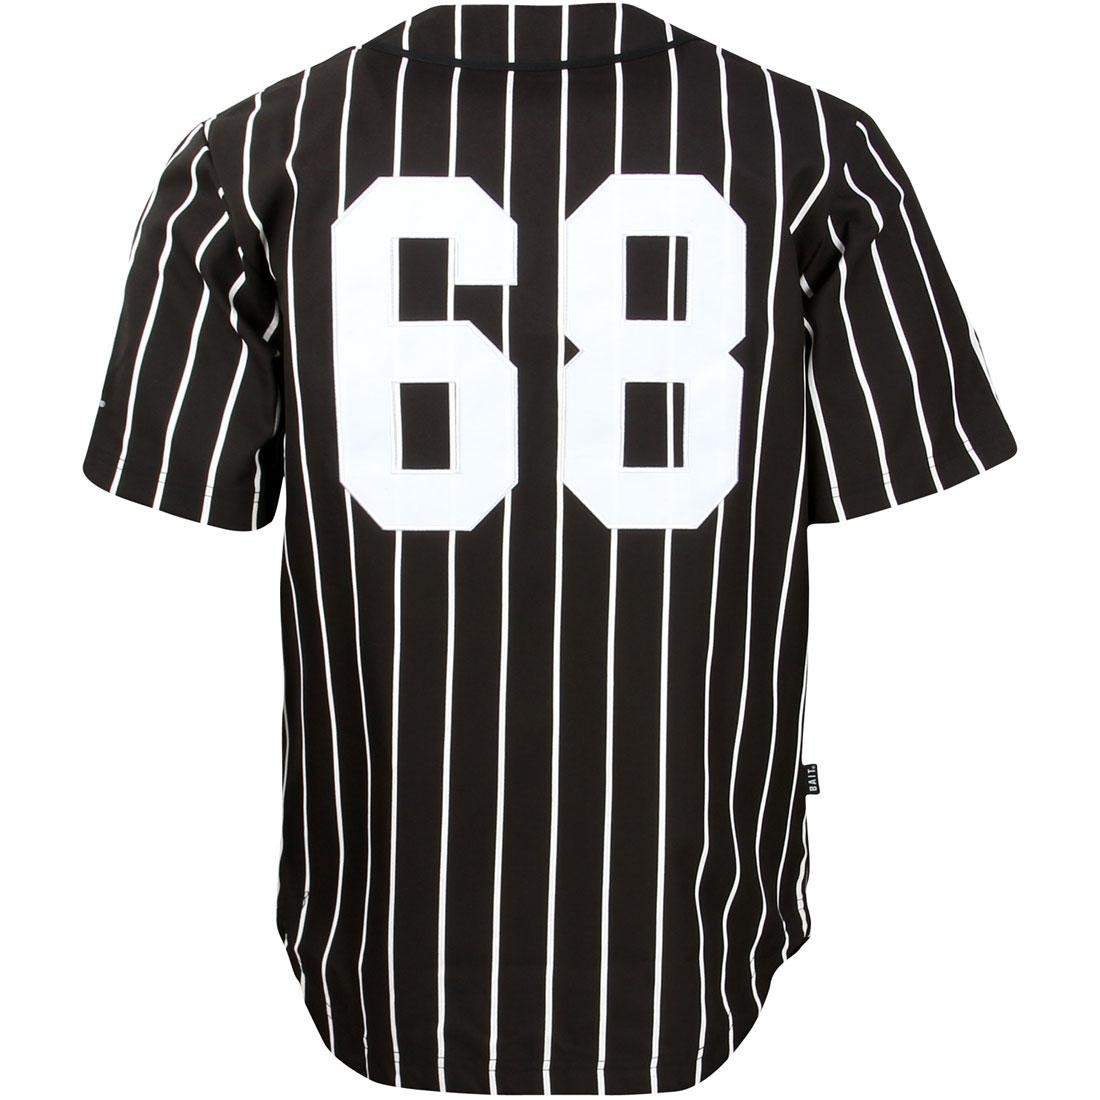 black pinstripe baseball uniforms